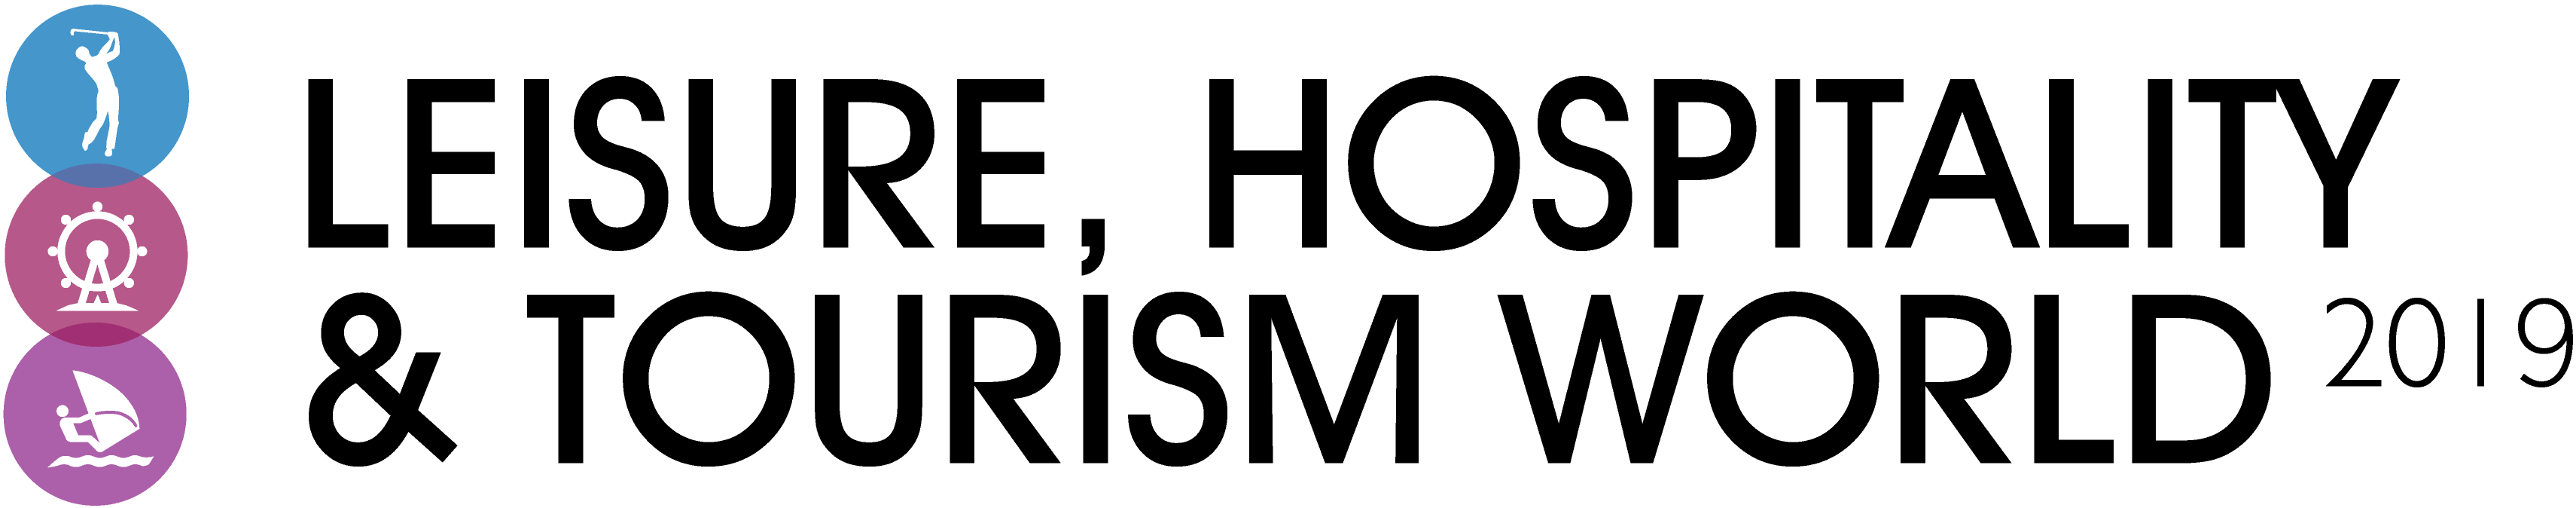 The Leisure, Hospitality & Tourism World Expo logo